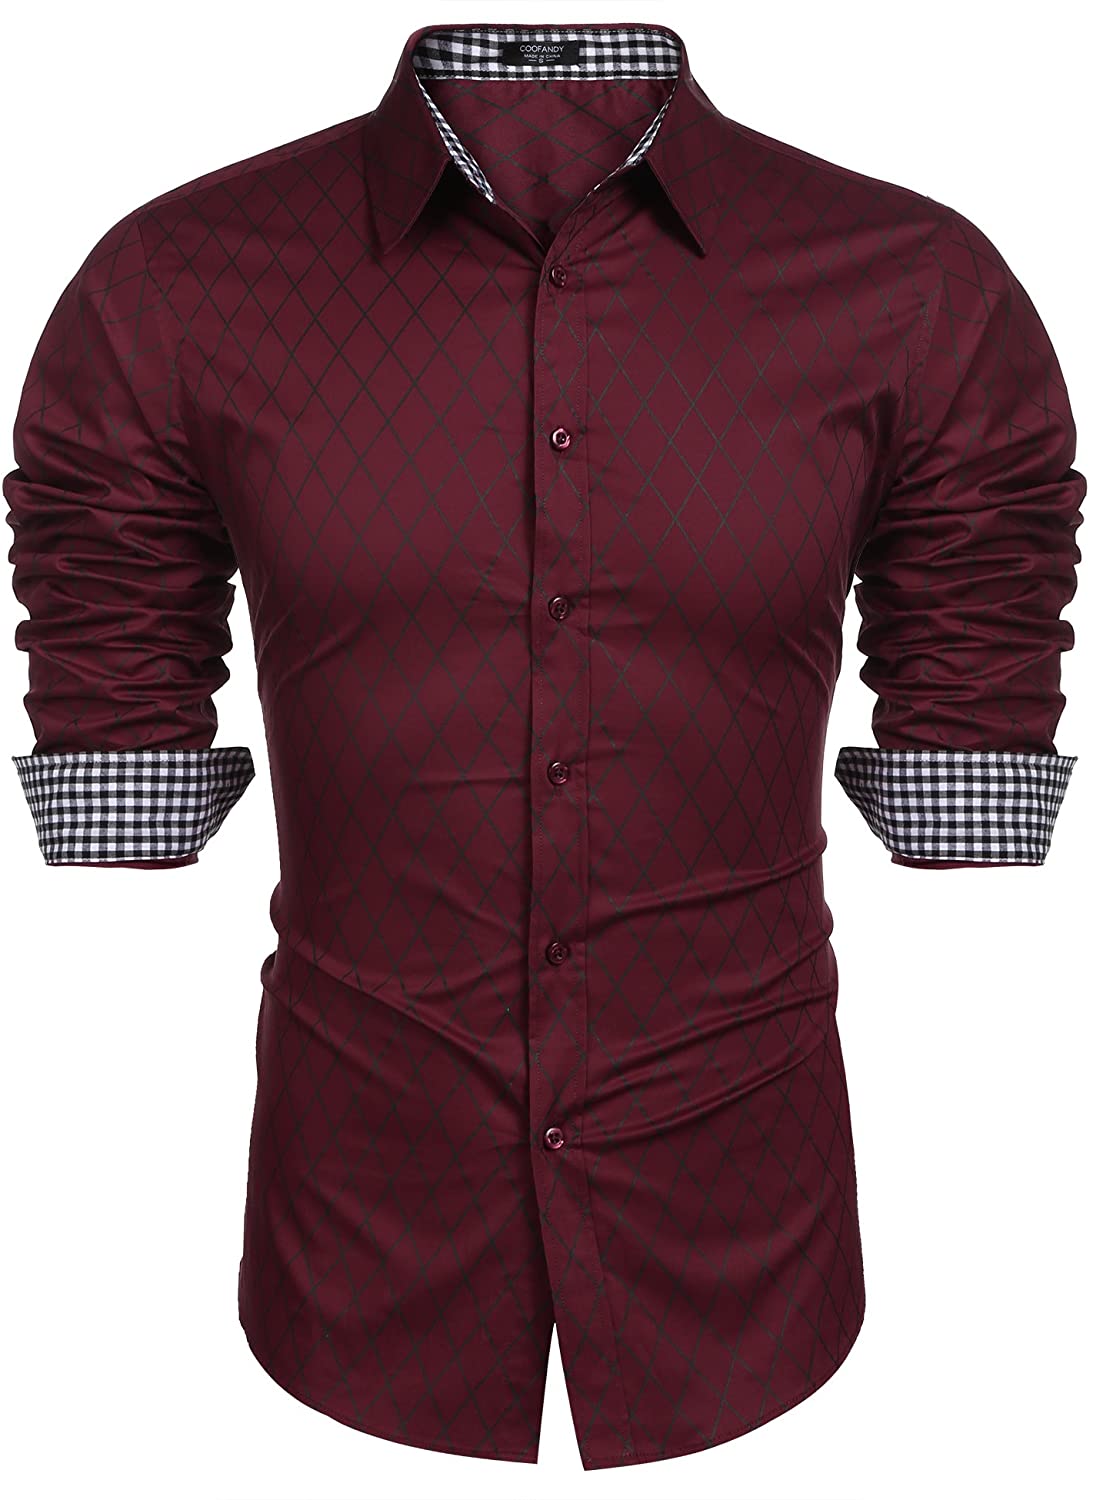 COOFANDY Men's Business Dress Shirt Long Sleeve Slim, Wine Red, Size XX ...